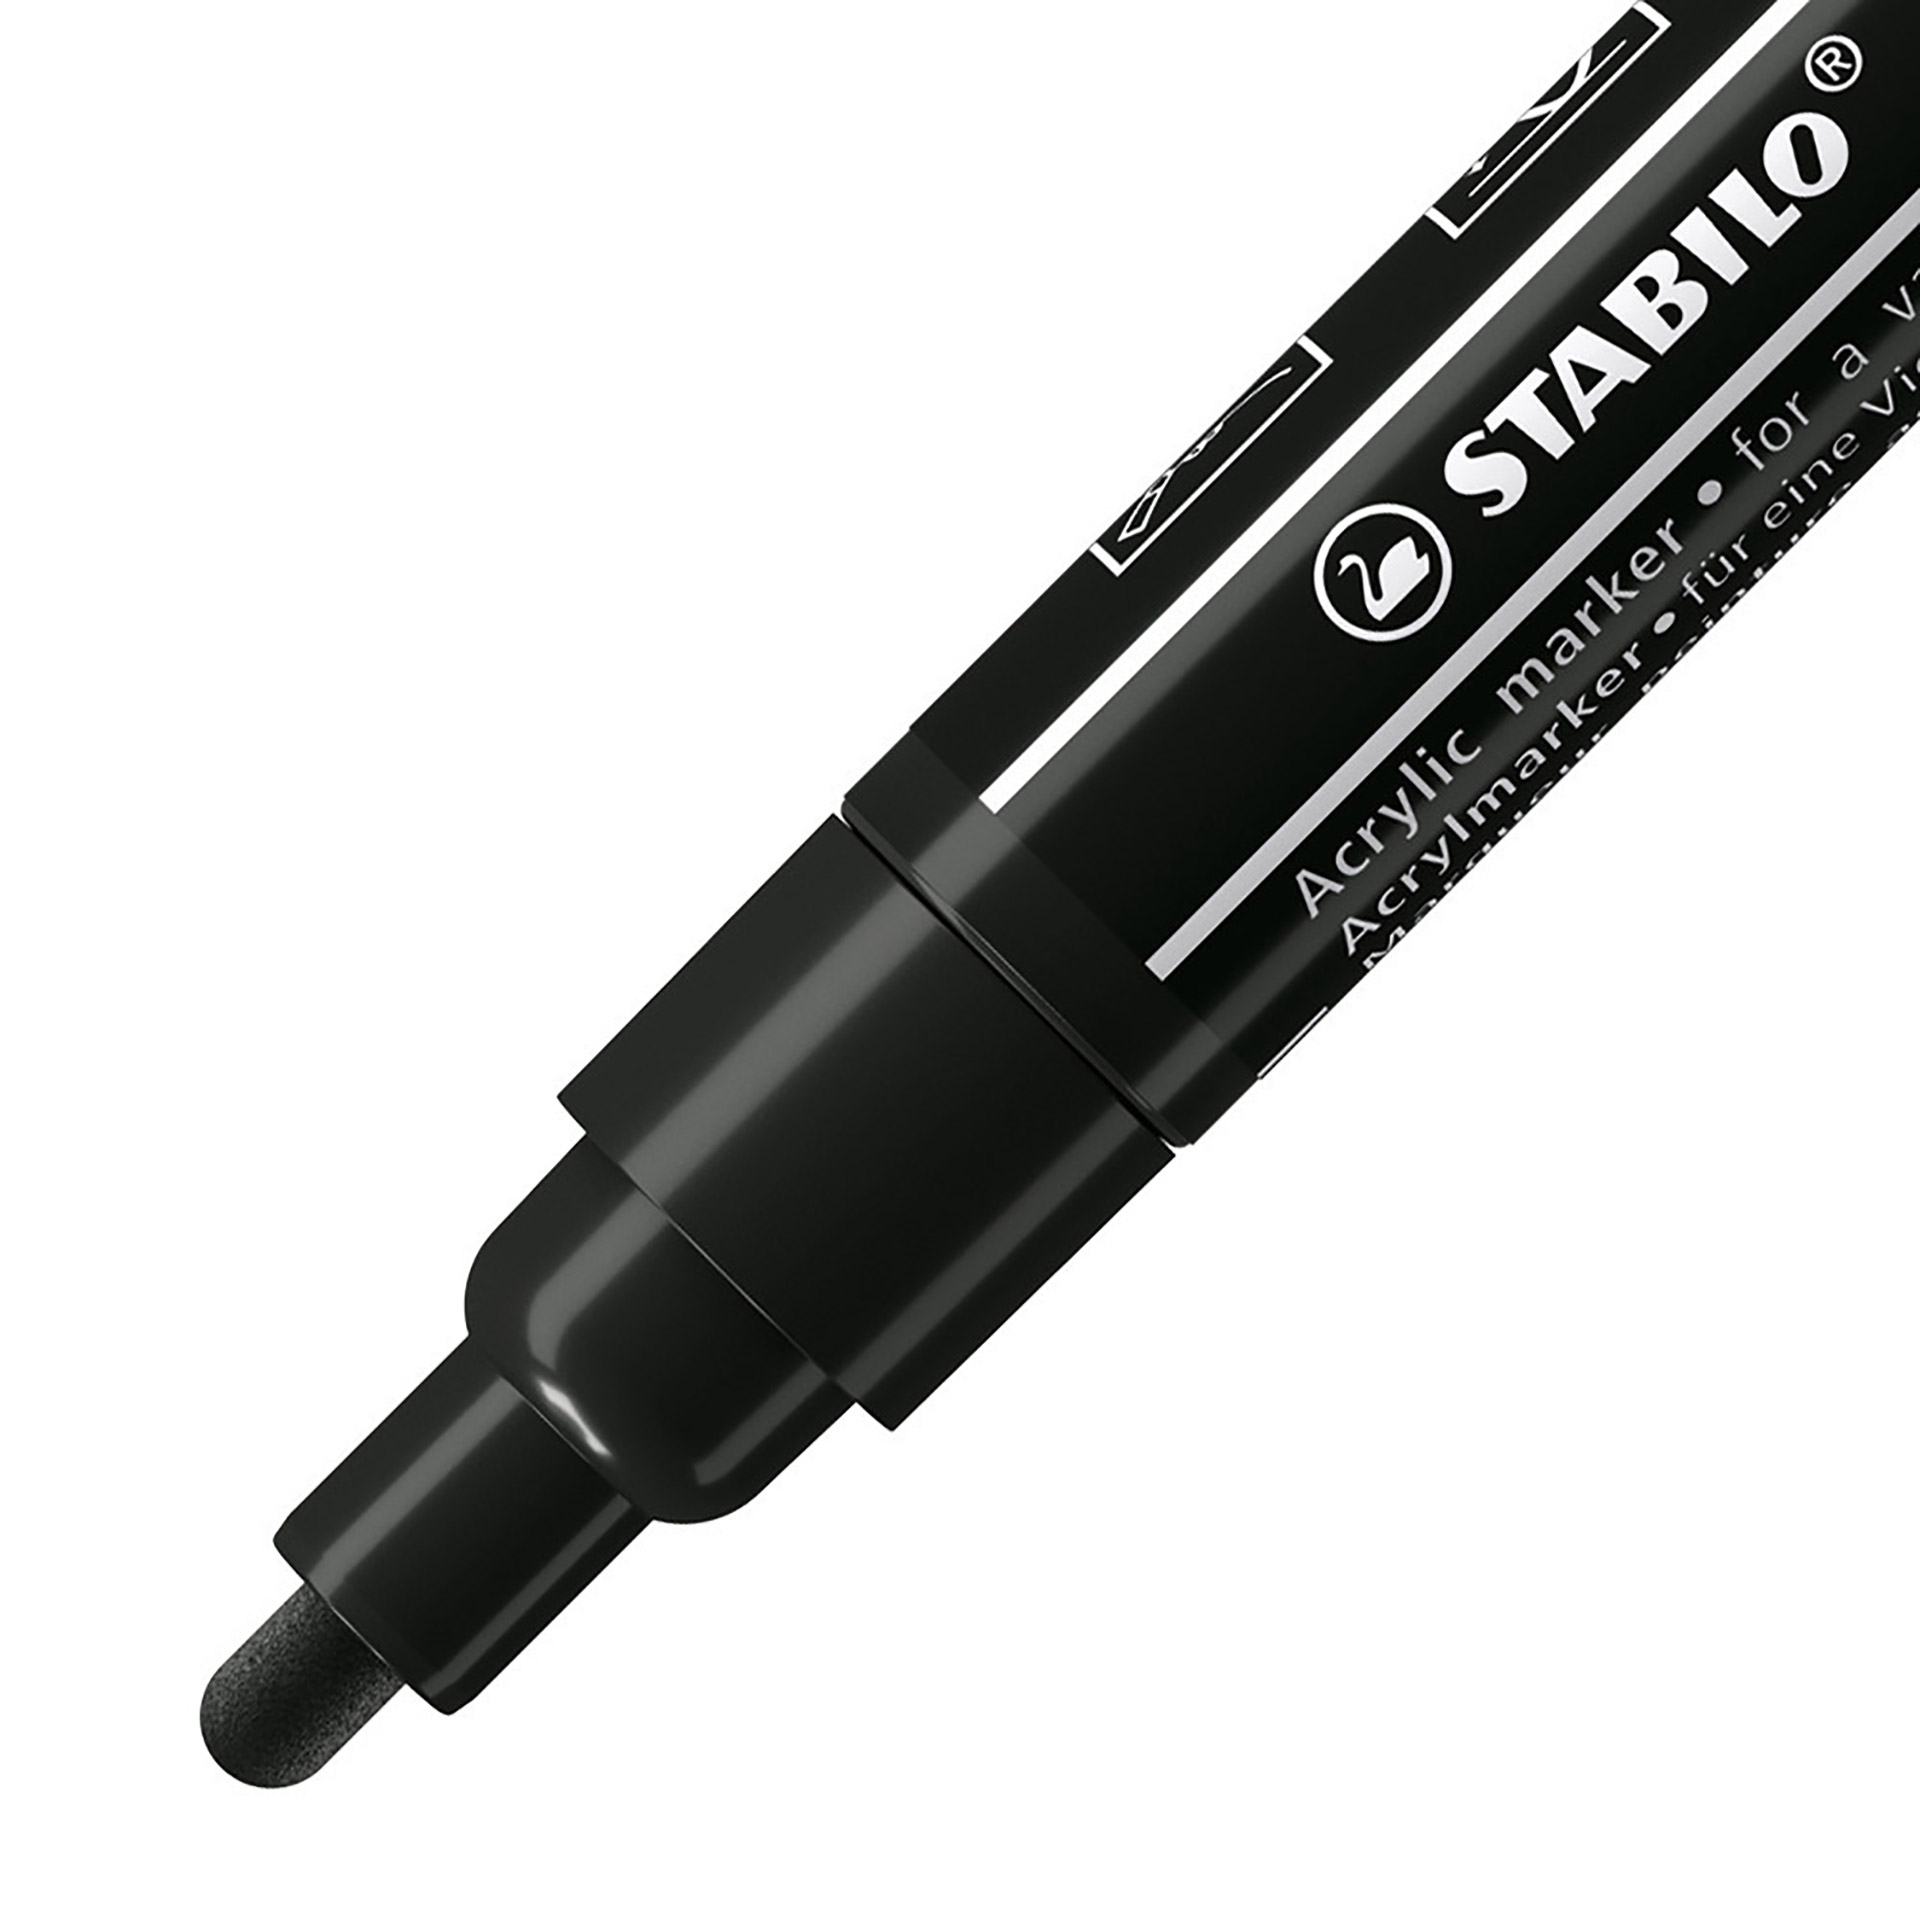 STABILO FREE Acrylic - Pack  da 3 - 1x T100, T300, T800C - con 3 punte diverse, , large